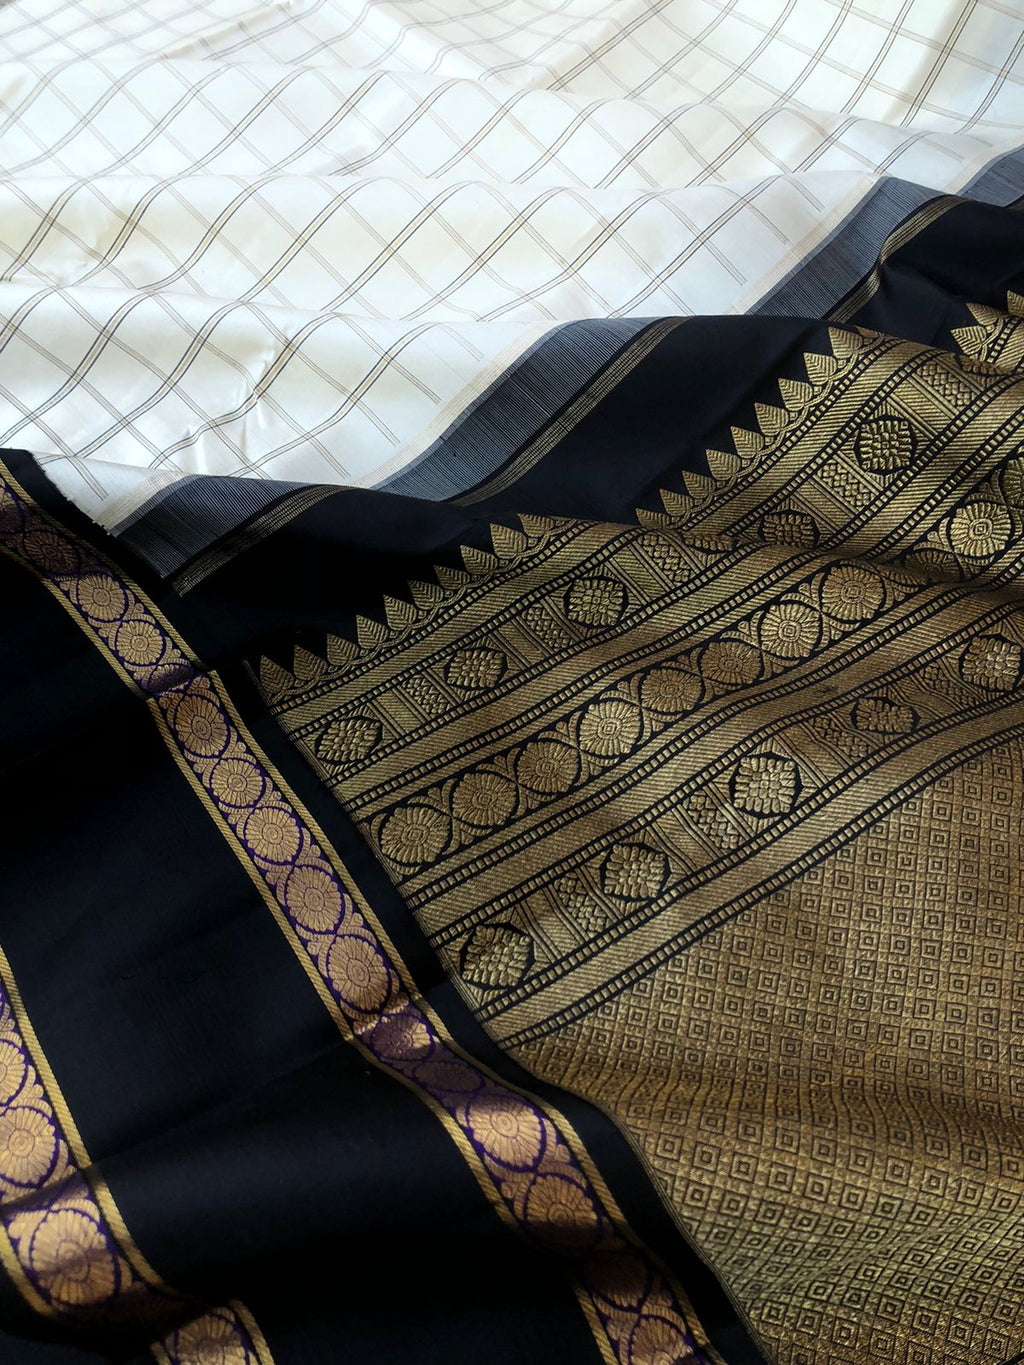 Vintage Ragas on Kanchivaram - the most smartest off white and black muthukattam woven body with retta pett woven borders